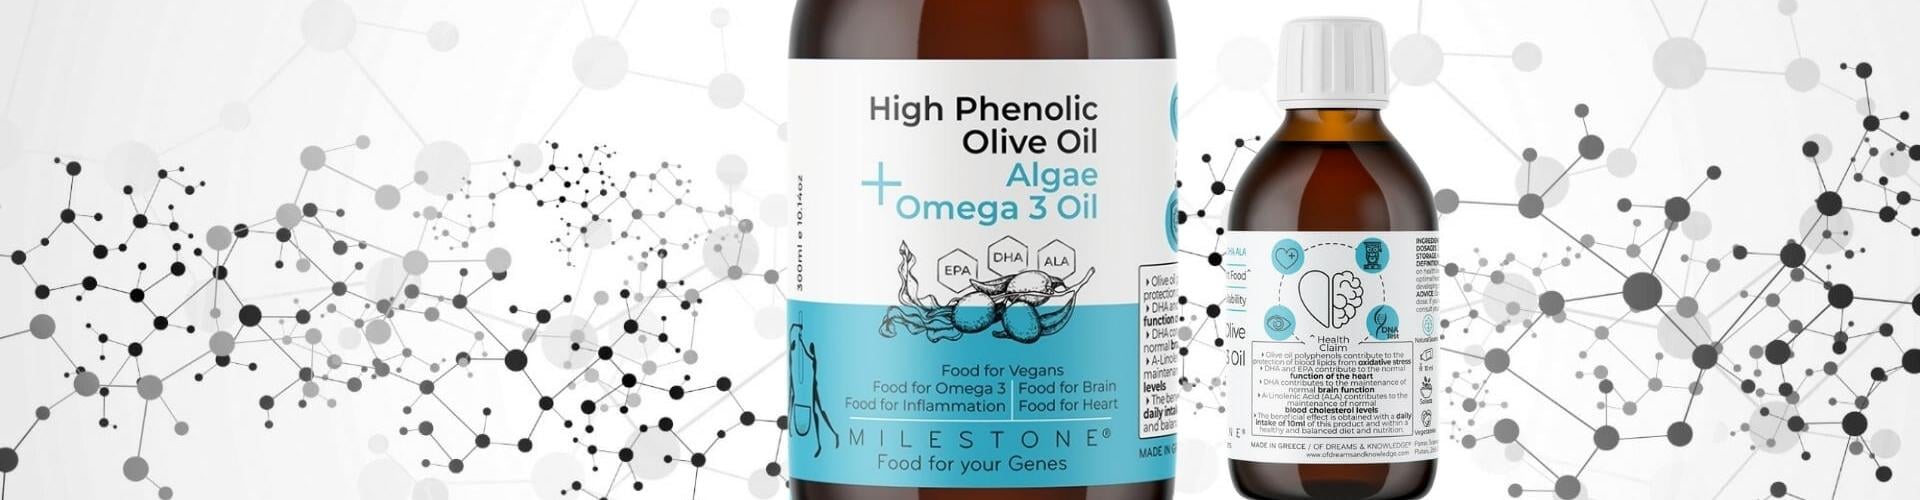 milestone food for your genes high phenolic olive oil with algae omega 3 oil